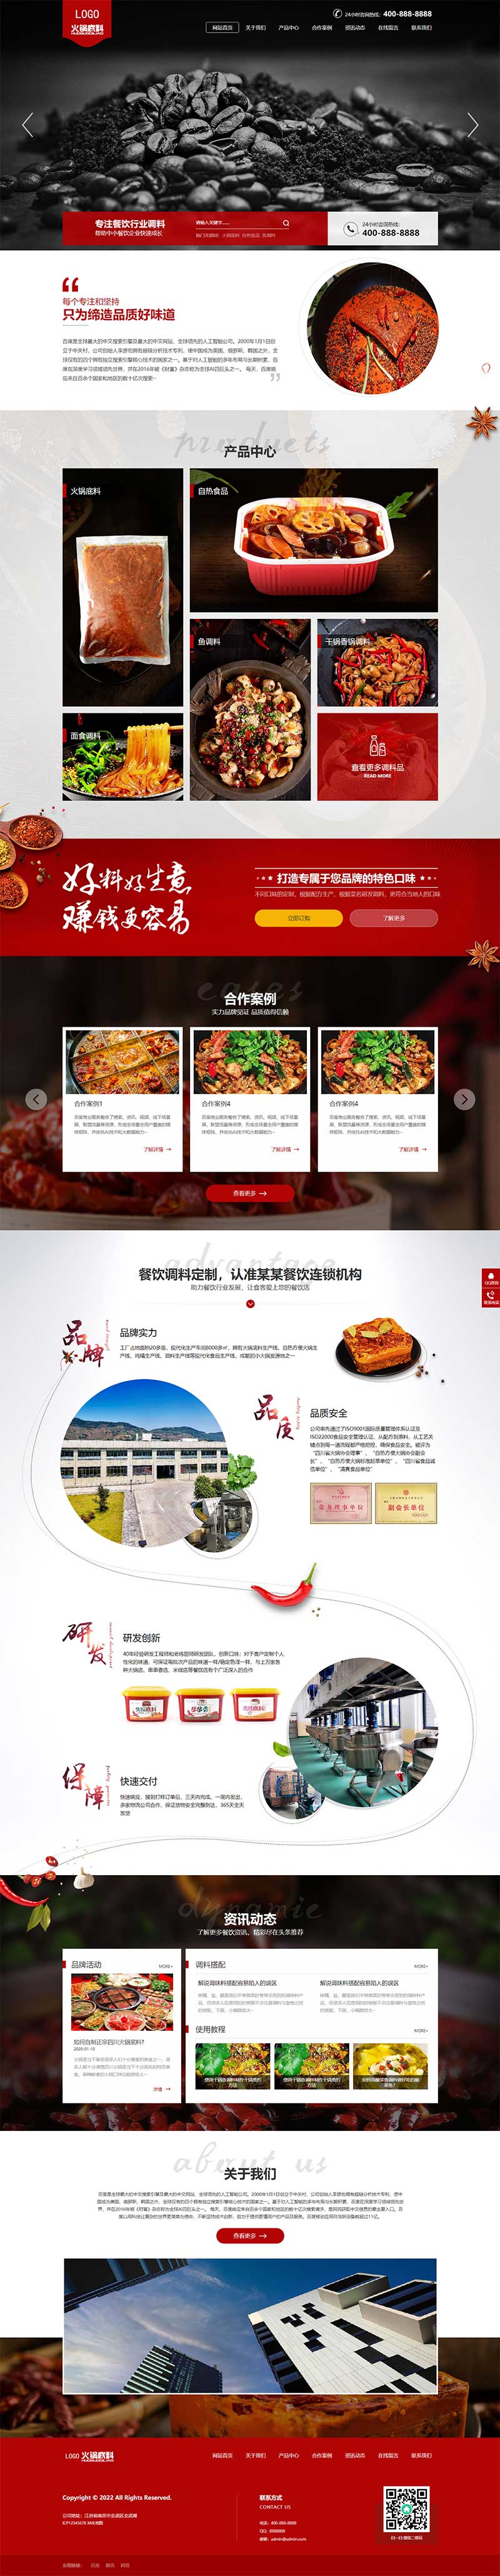 (PC+移动端)pbootcms高端火锅底料食品调料网站模板 营销型餐饮美食网站源码下载